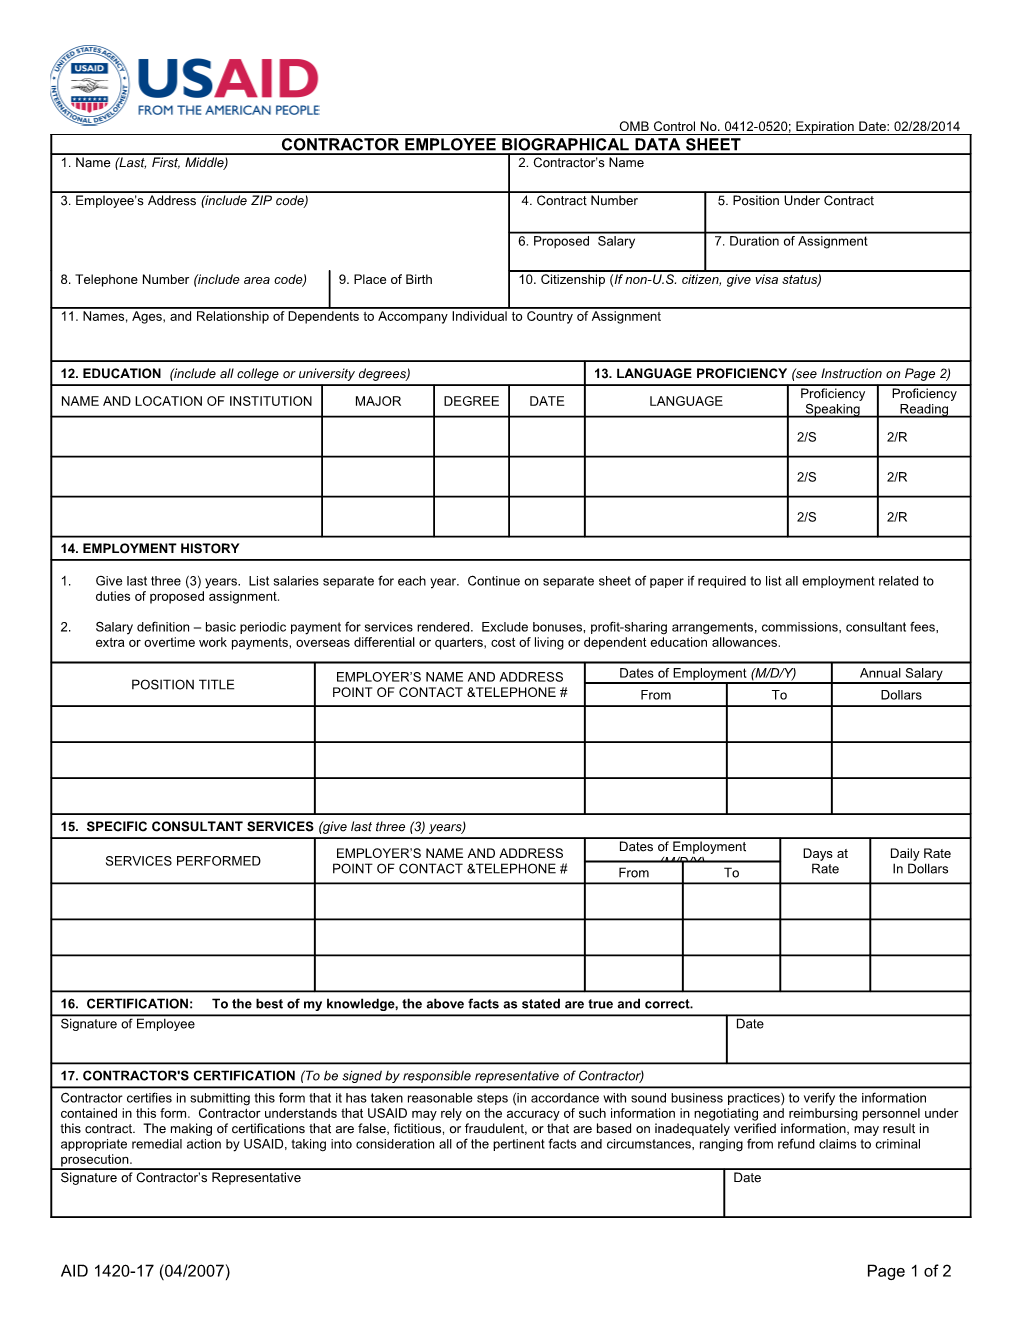 Contractor Employee Biographical Data Sheet s2